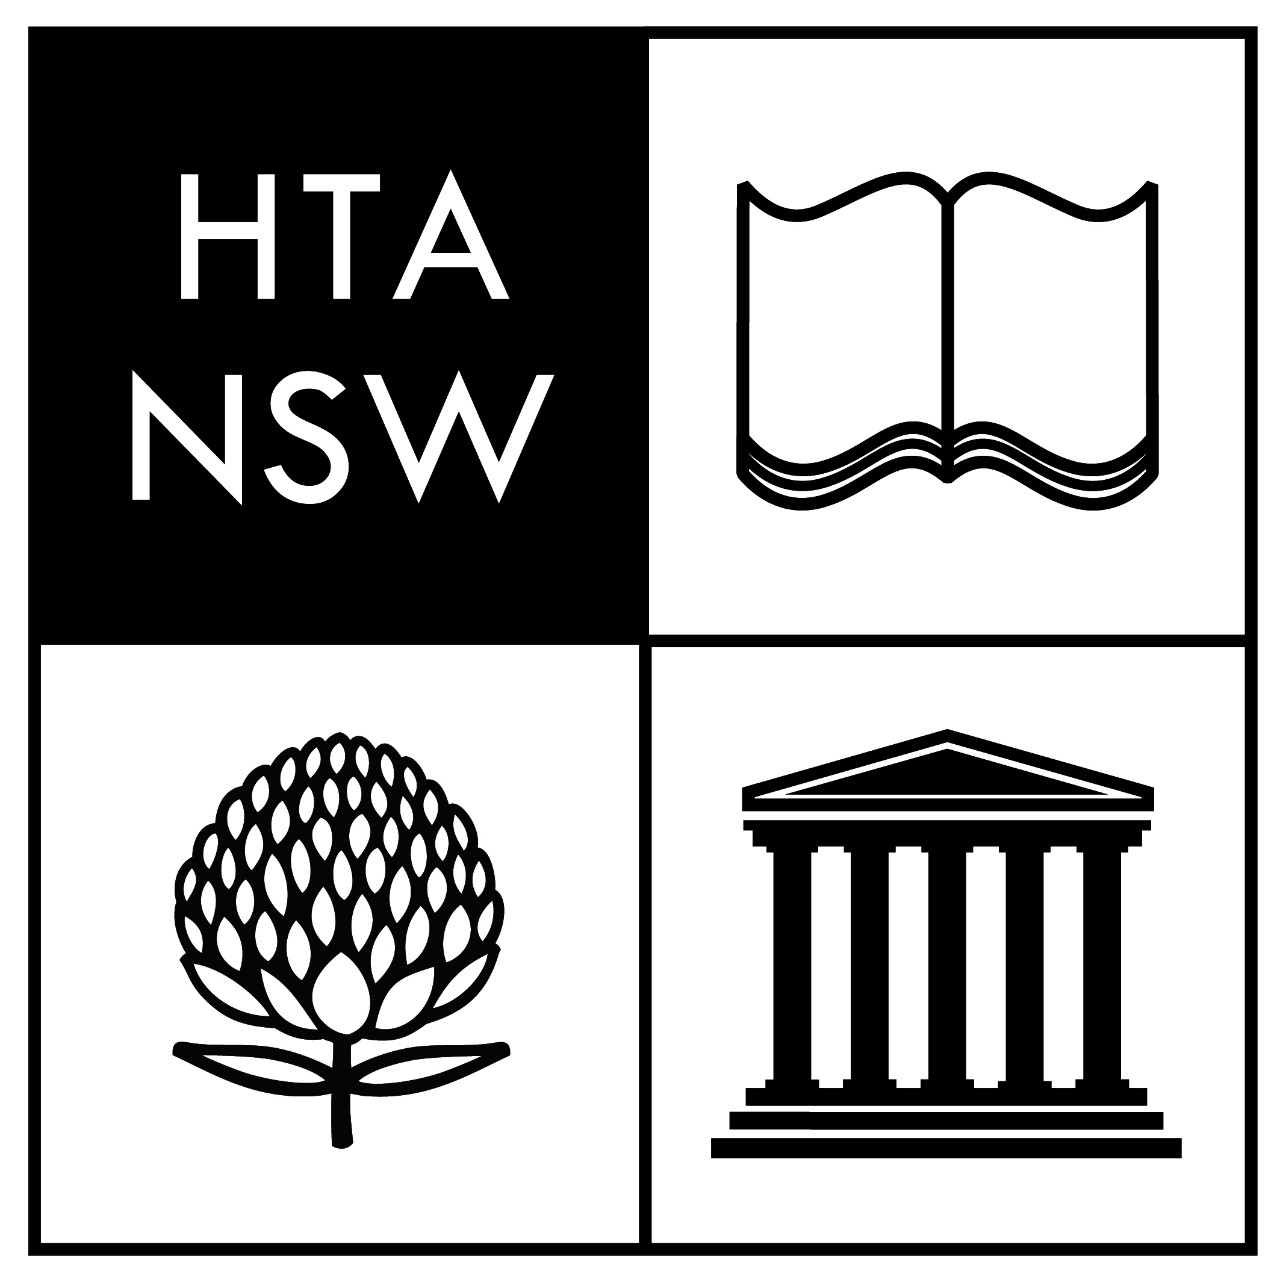 History Teachers Association of NSW logo